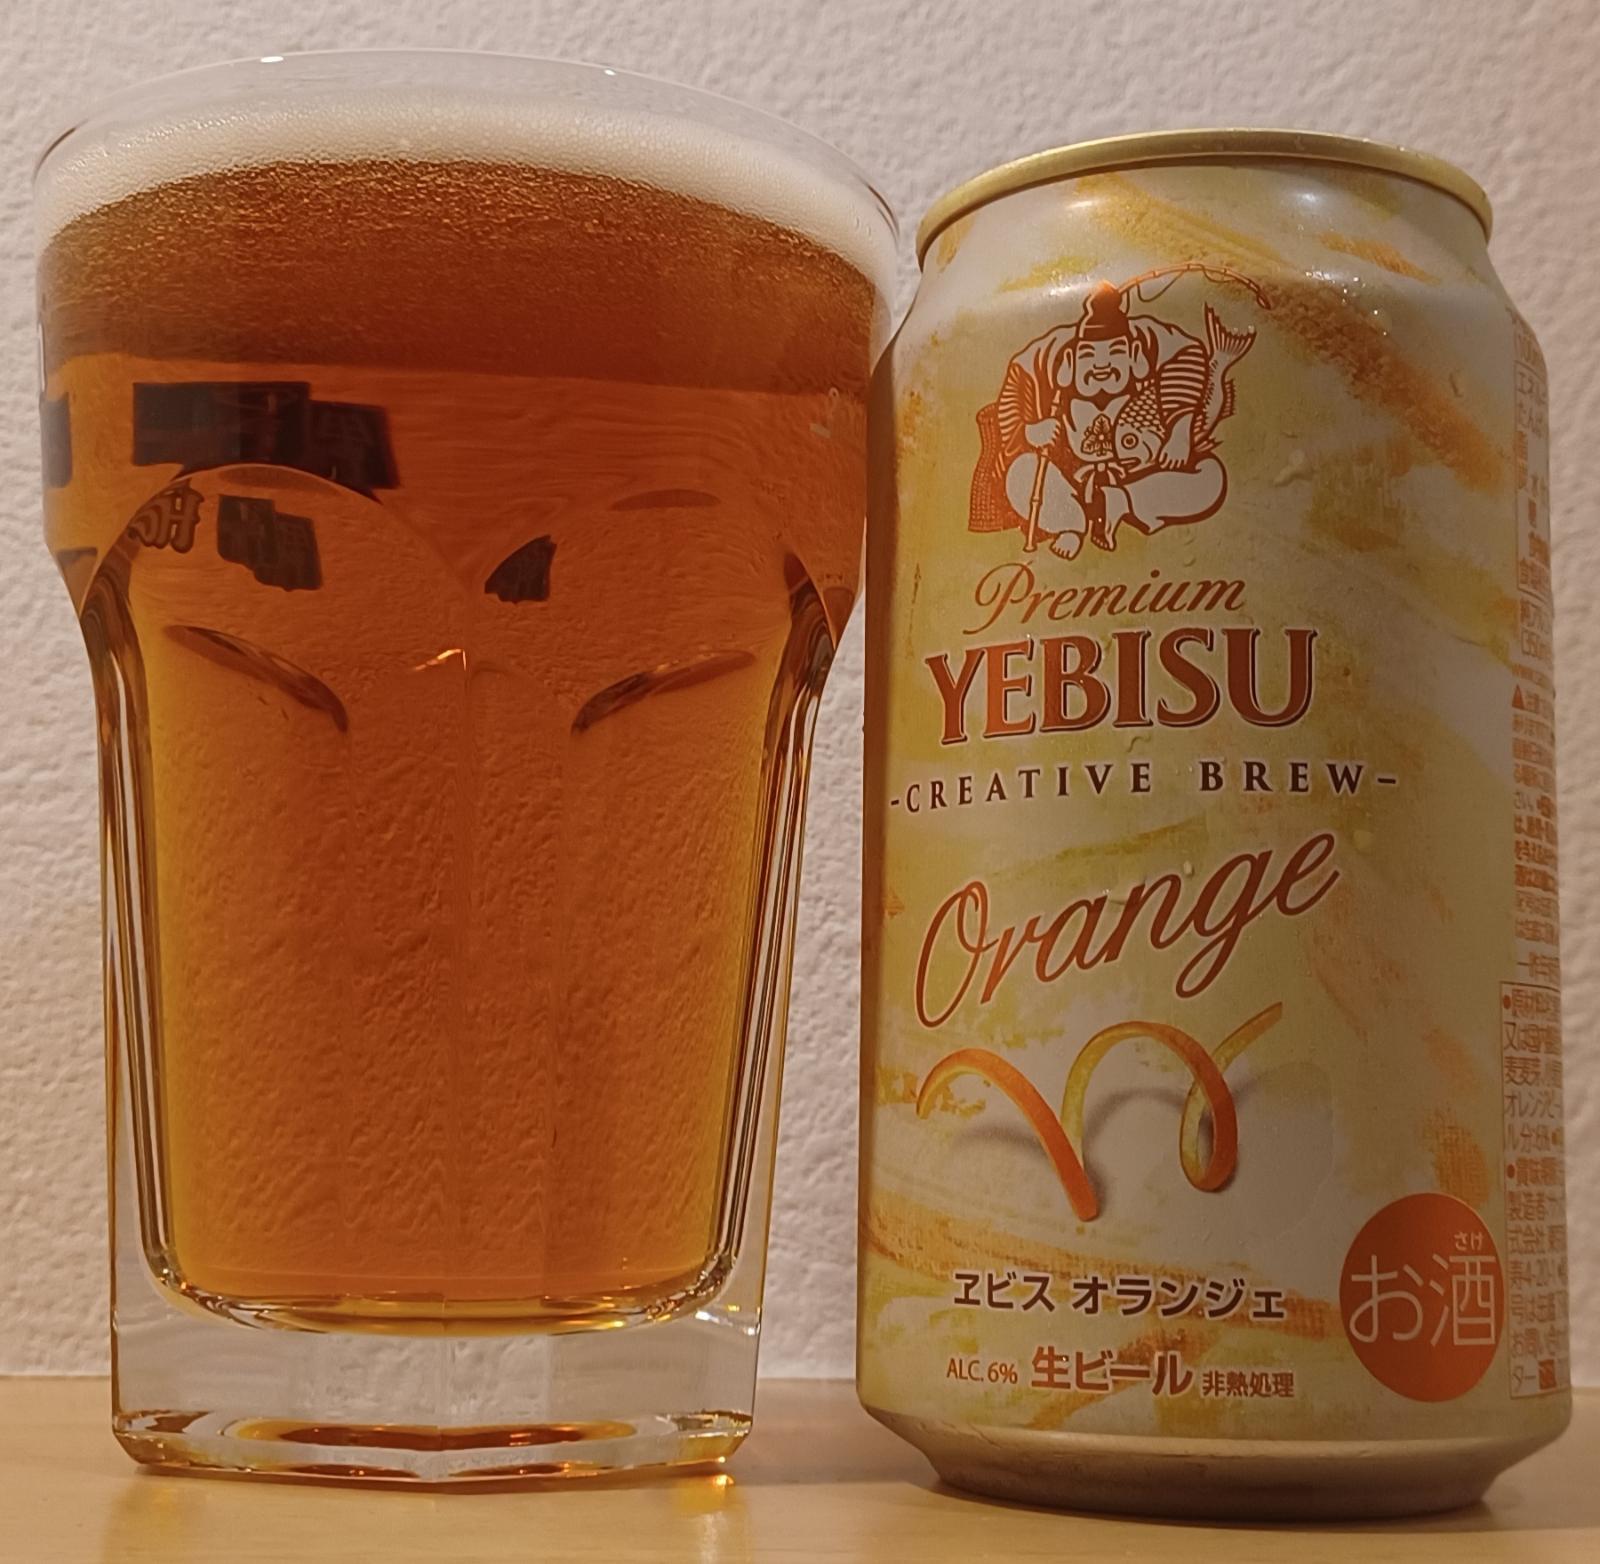 Premium Yebisu Creative Brew: Yebisu Orange